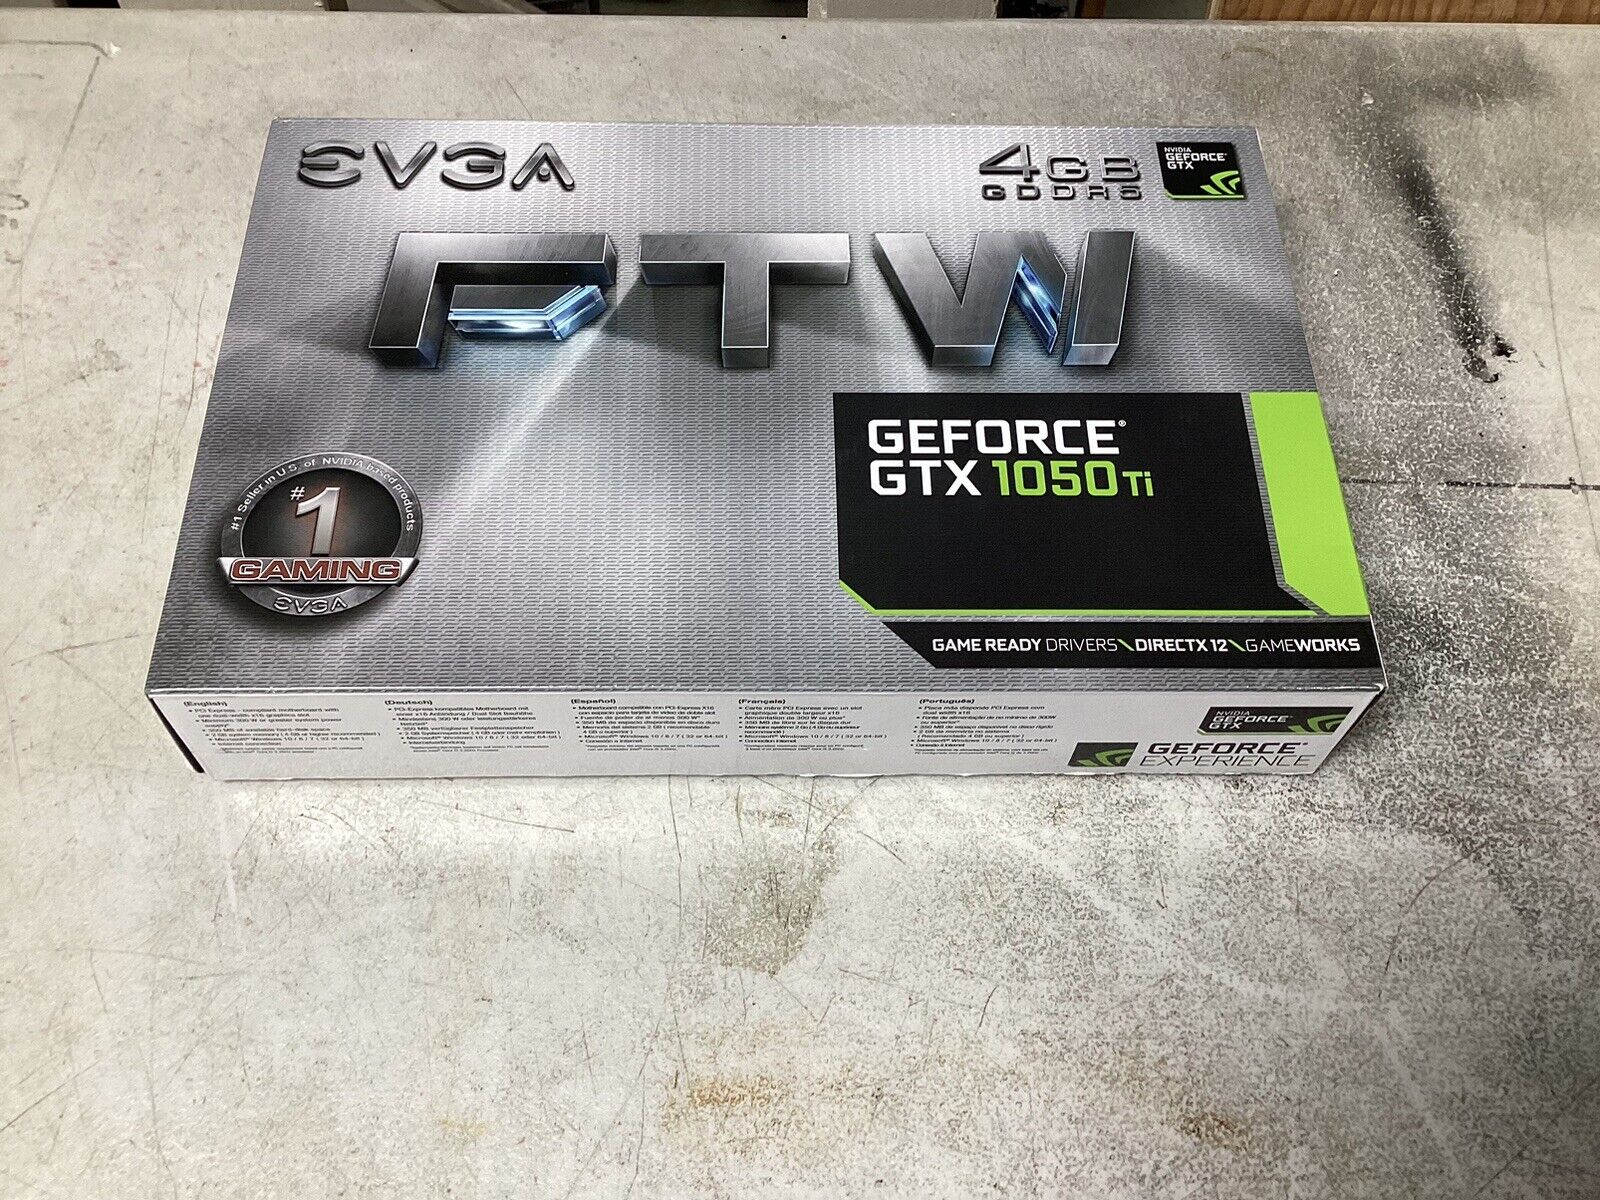 EVGA GeForce GTX 1050 Ti FTW GAMING, 04G-P4-6258-KR, 4GB GDDR5, ACX 3.0